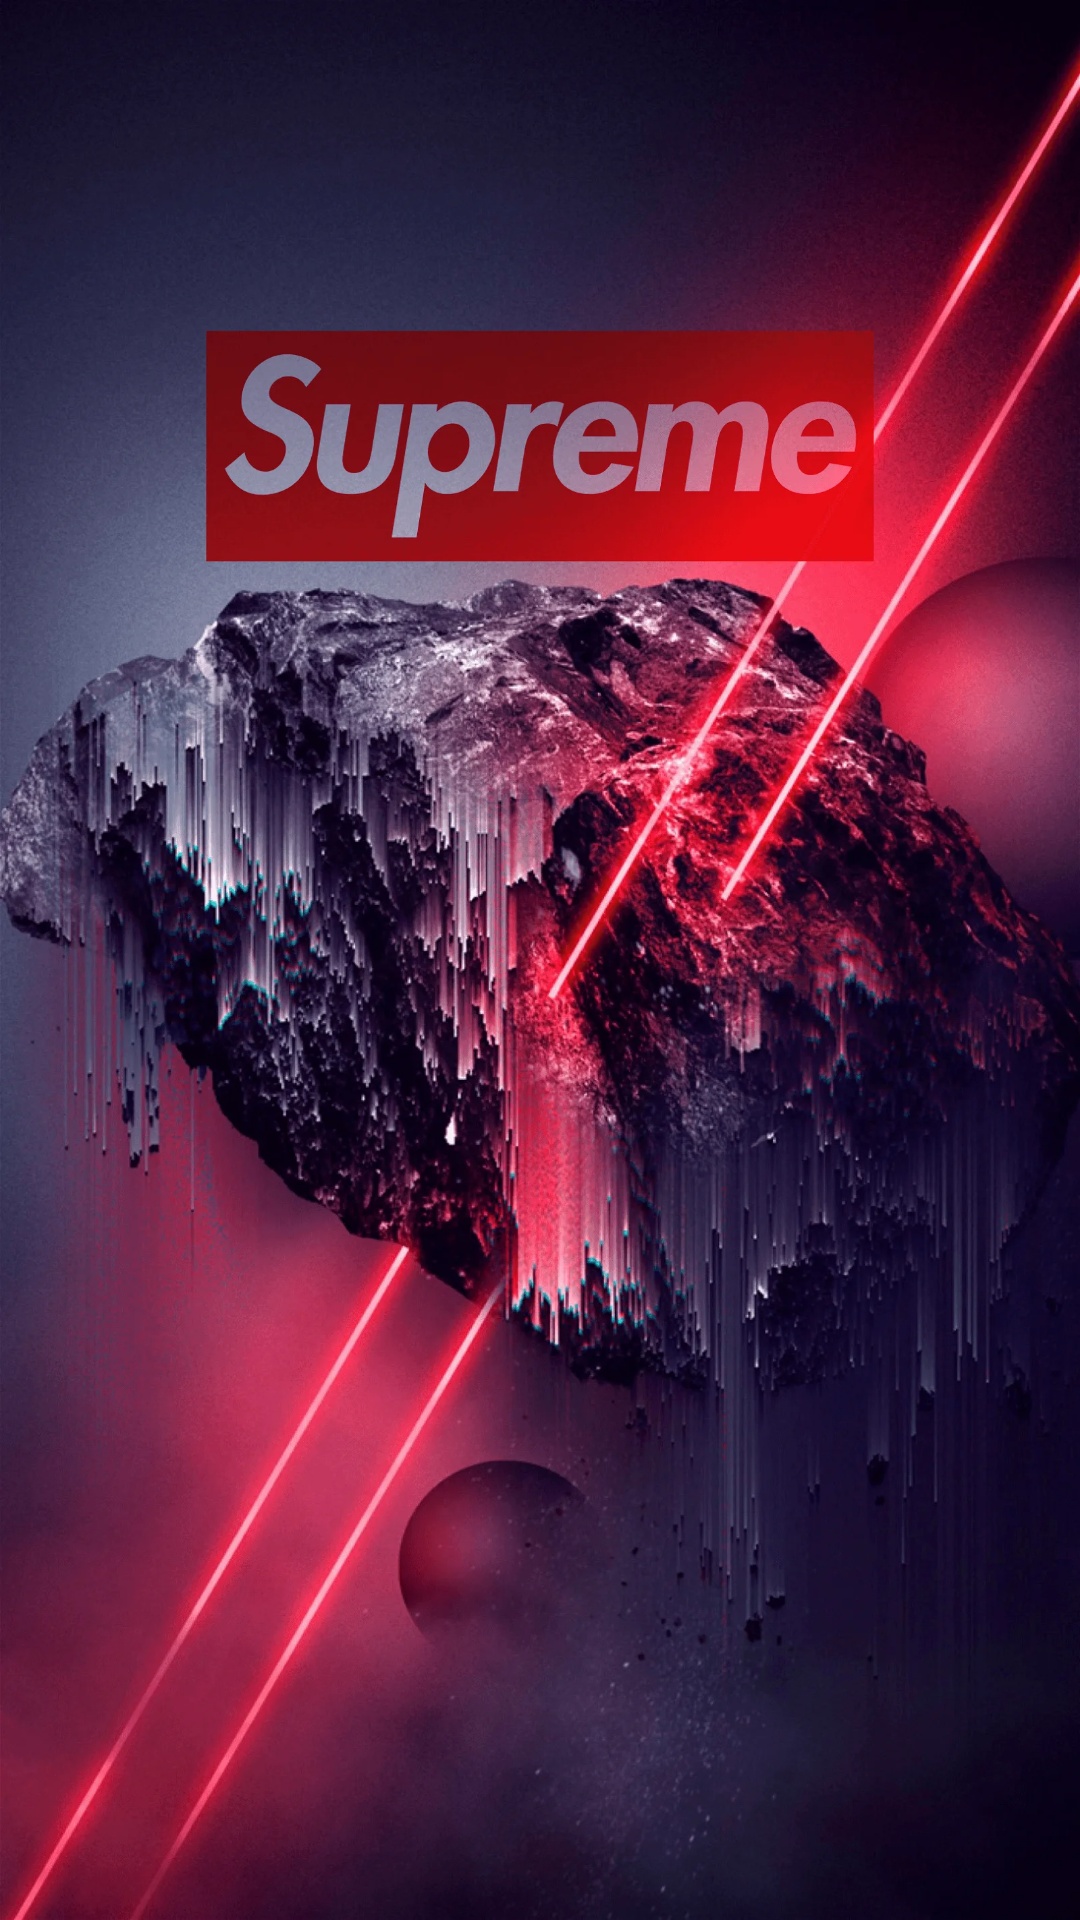 Super supreme wallpaper by KoolRaid - Download on ZEDGE™